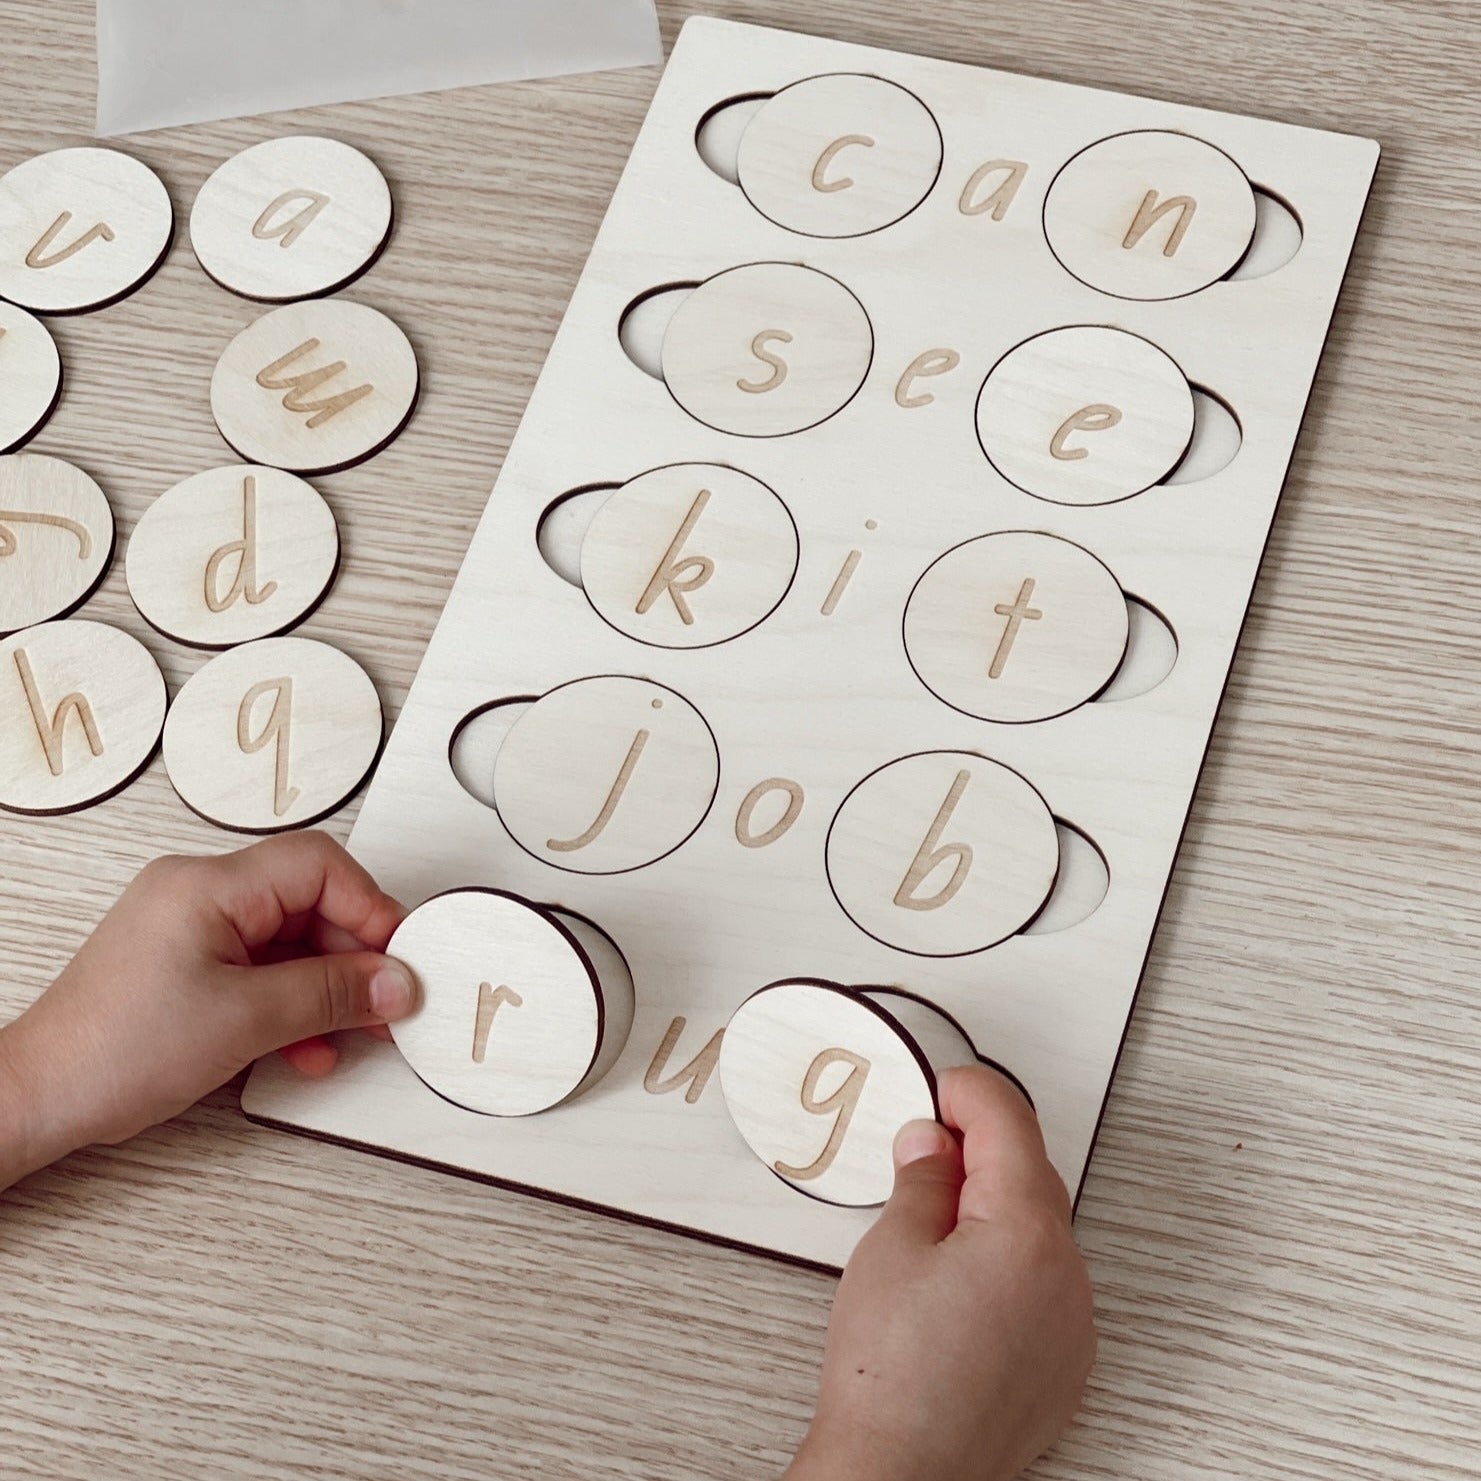 Timber CVC Board with Alphabet Discs